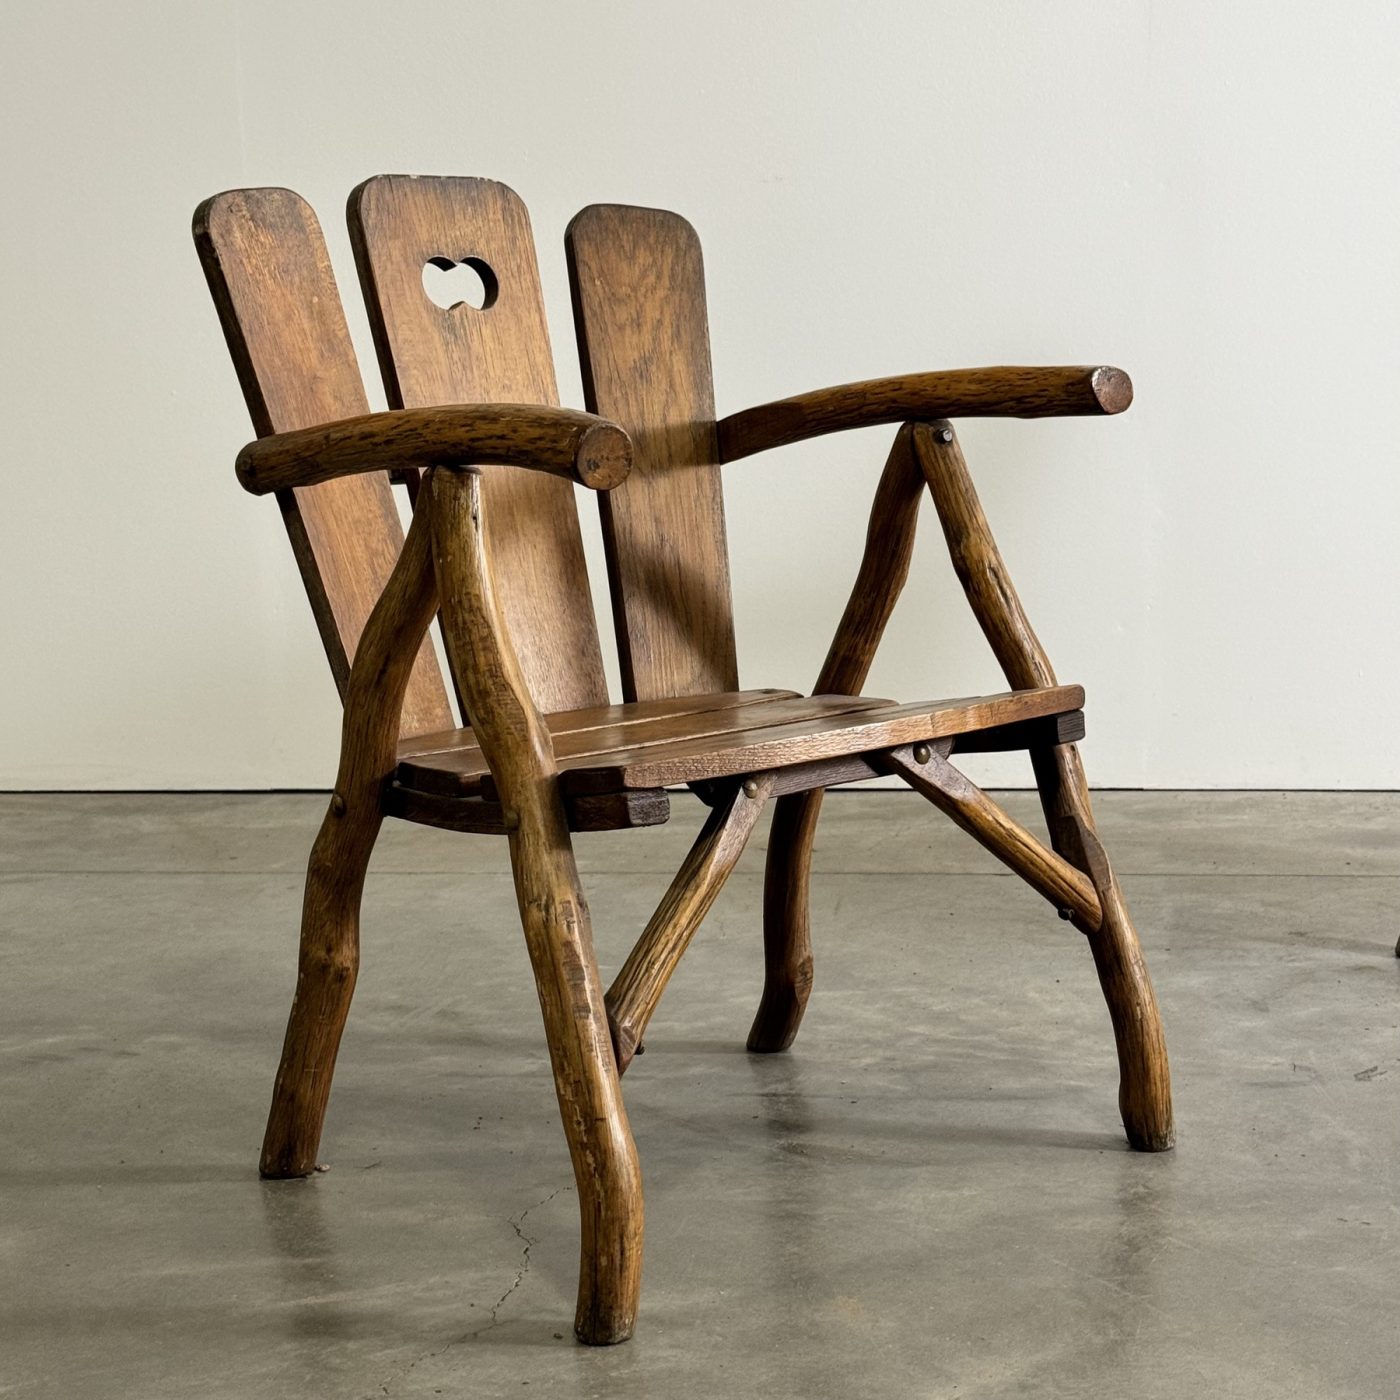 objet-vagabond-wooden-armchairs0001